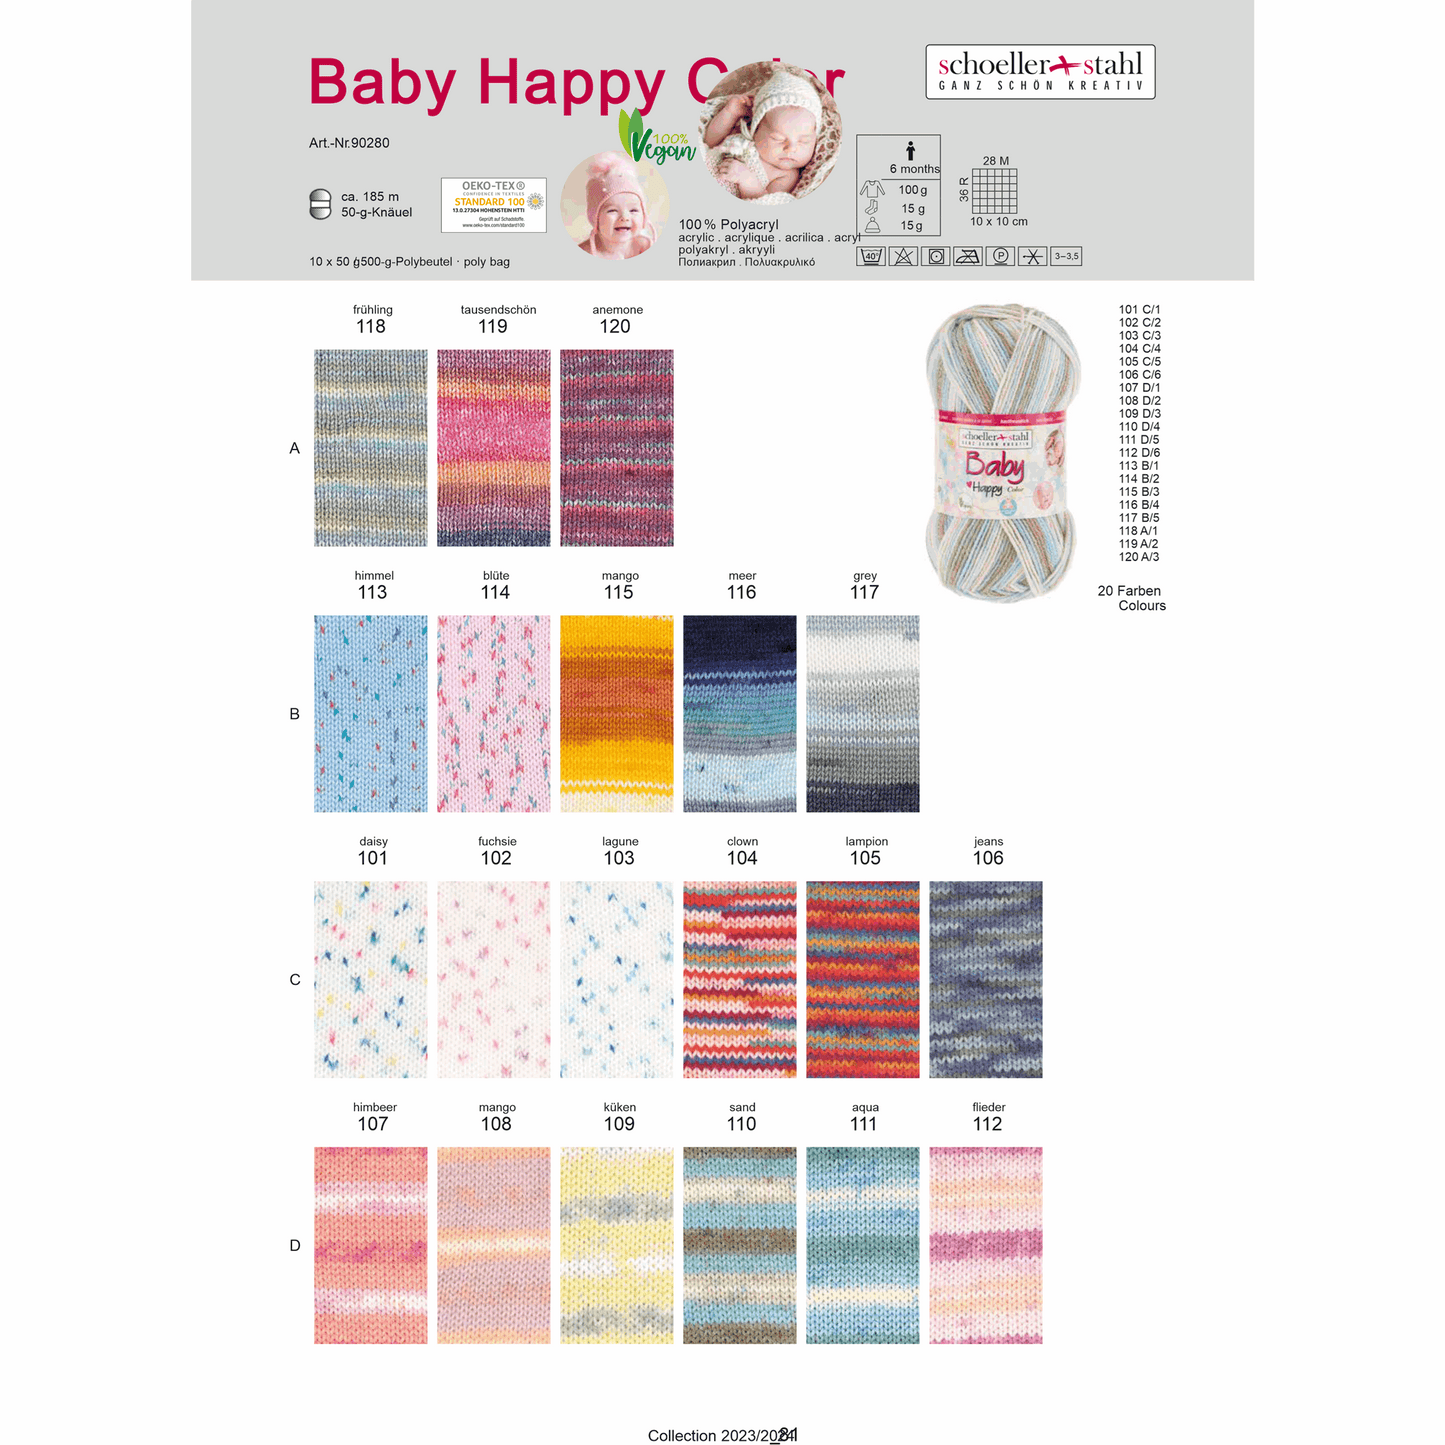 Baby happy color 50g, 90280, color 119, incredibly beautiful